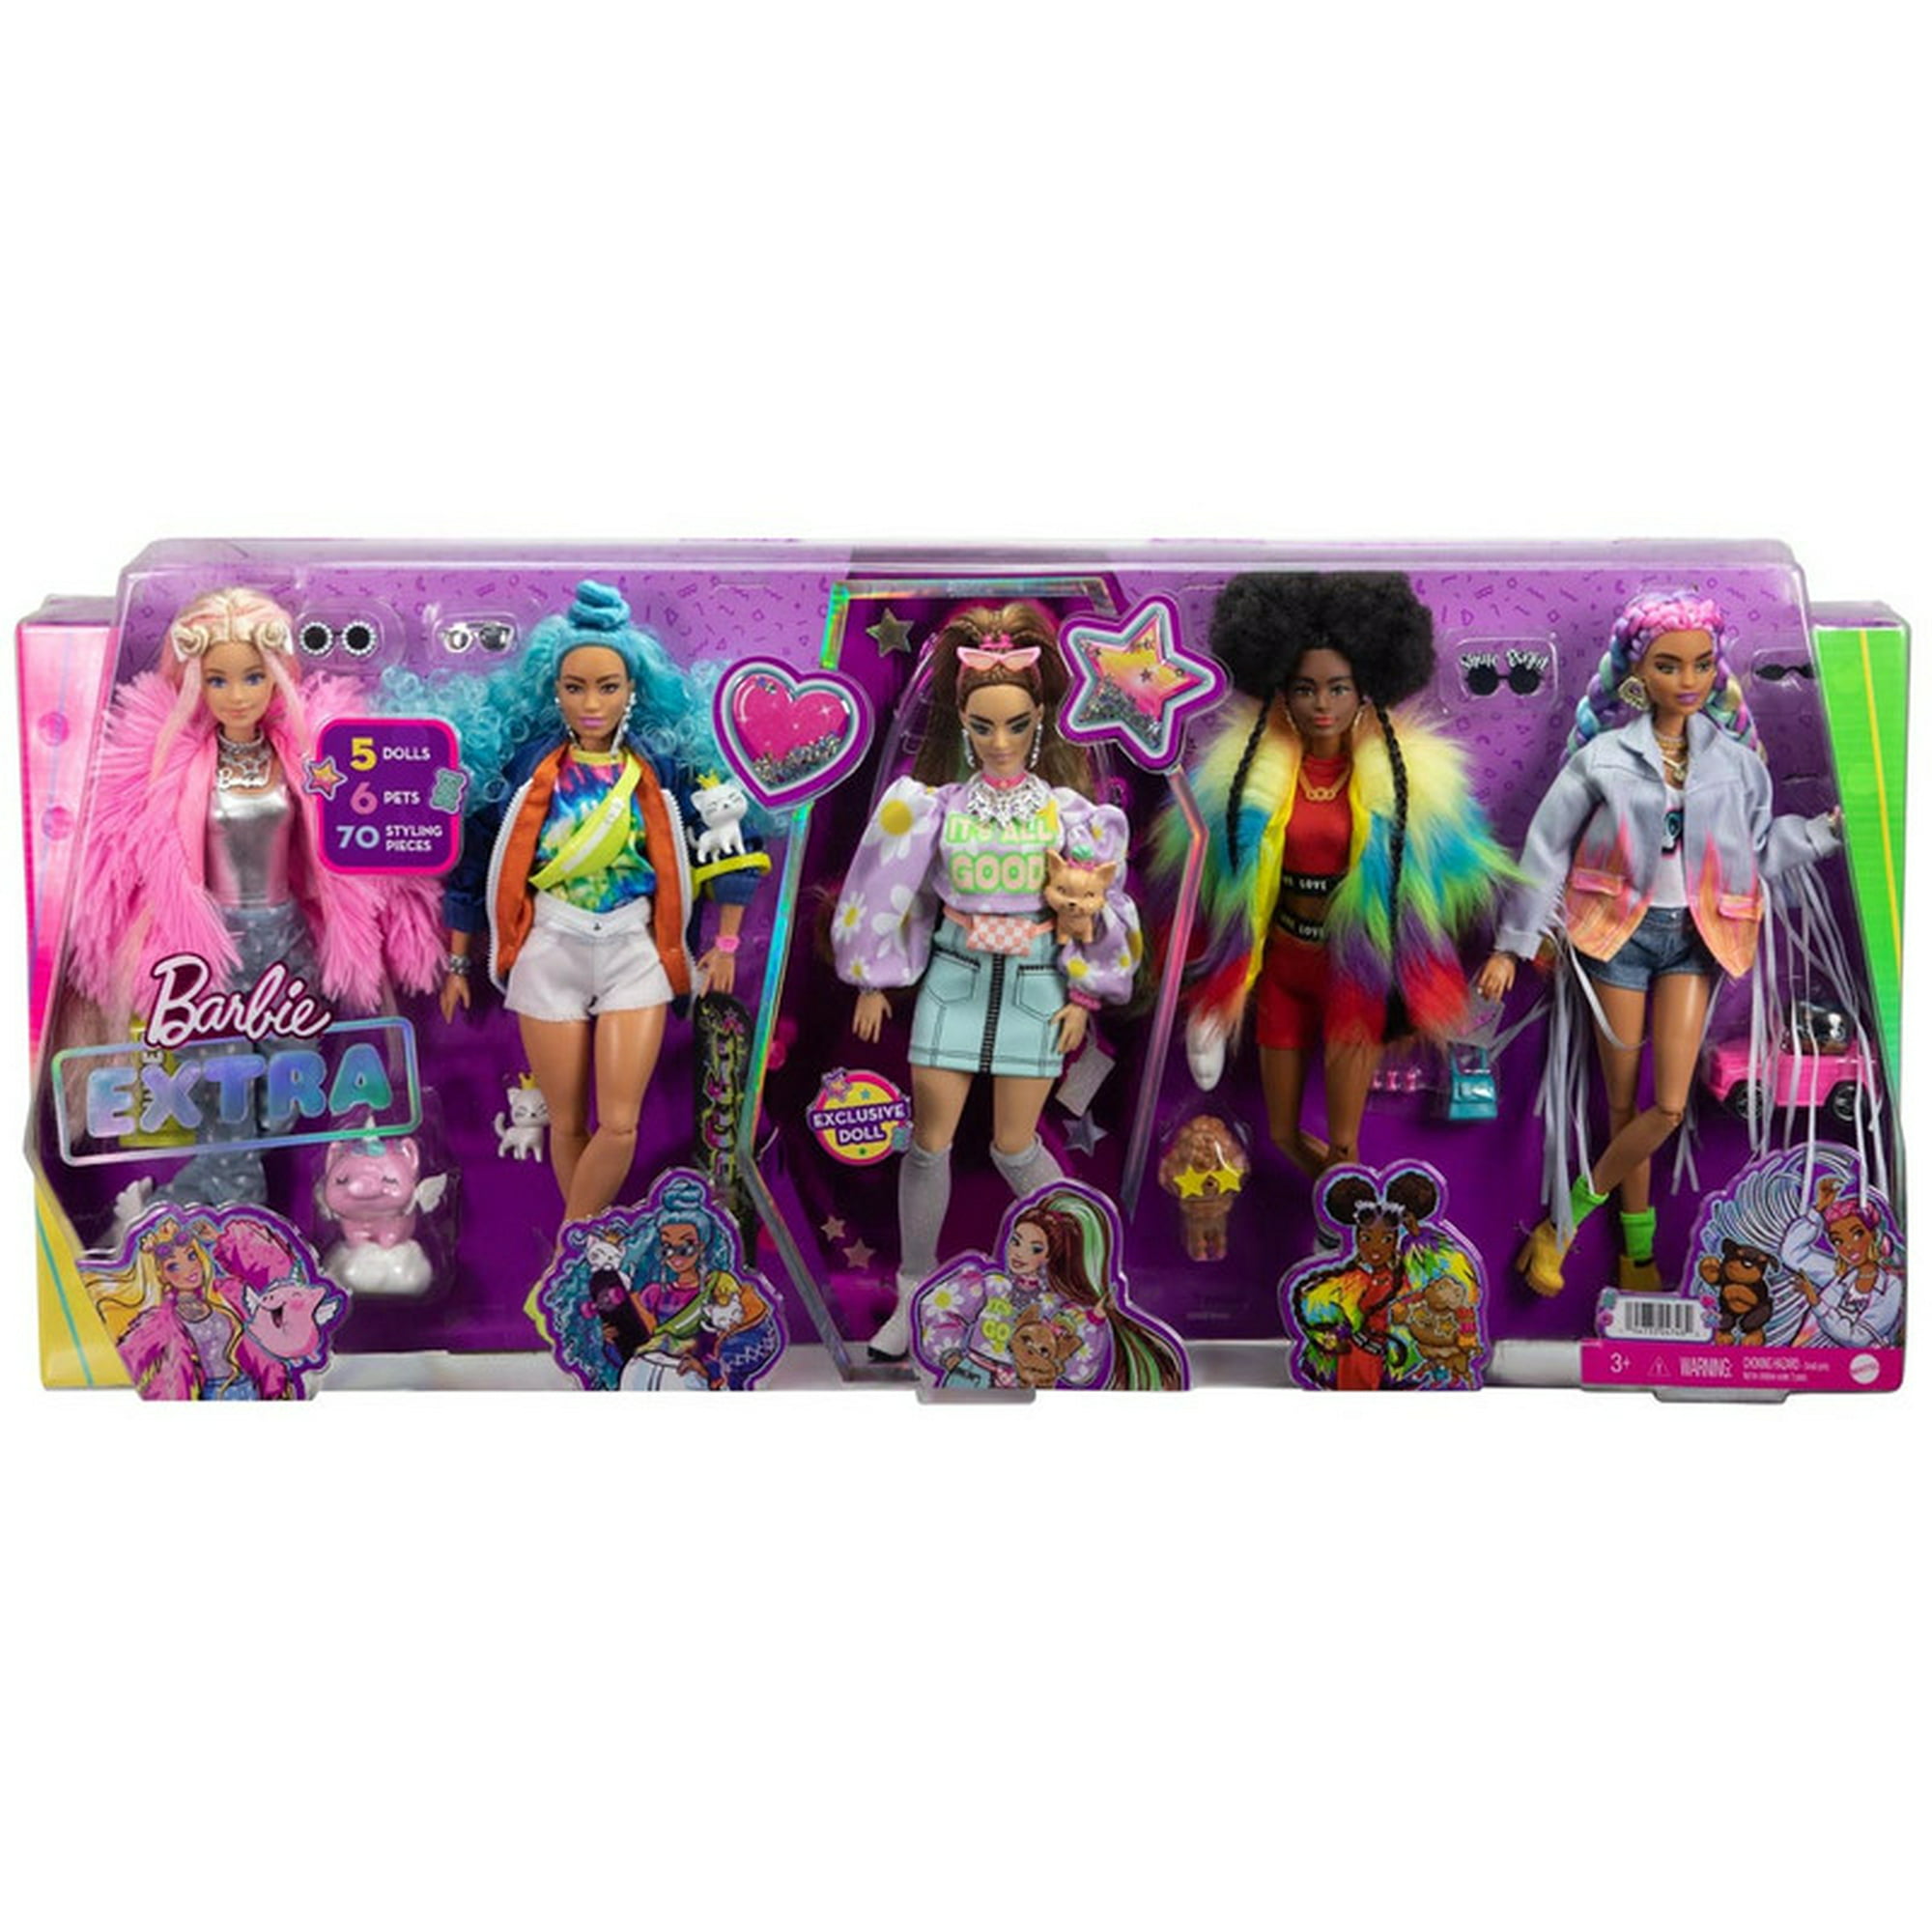 Accesorios para muñeca Barbie Moditas paquete de 2